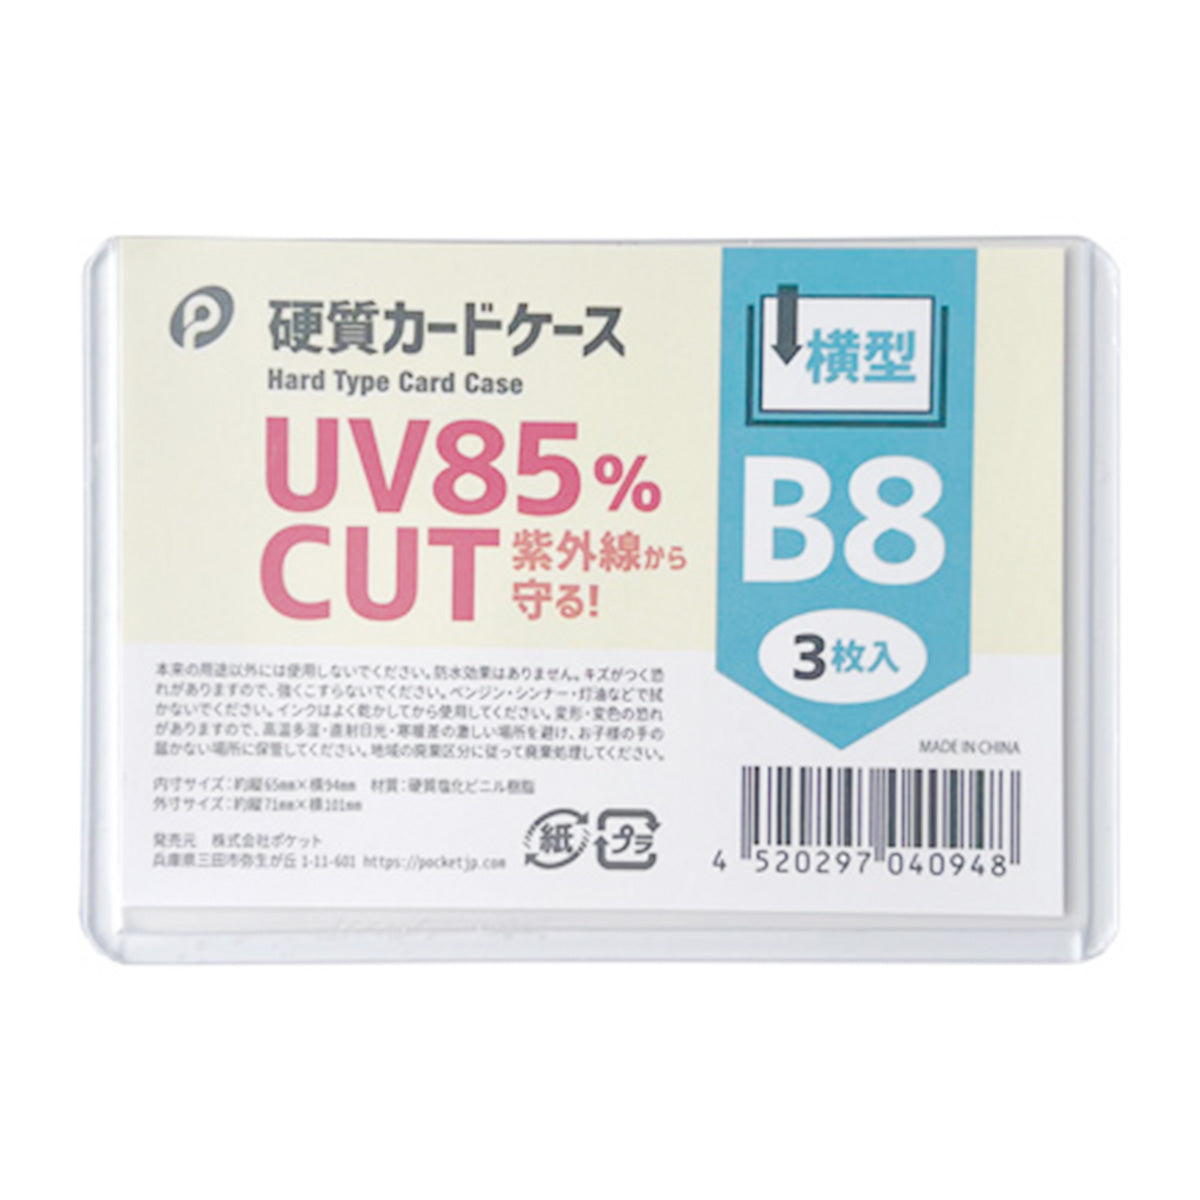 UVカット 硬質 カードケース 横型 B8 3枚入  0894/352128